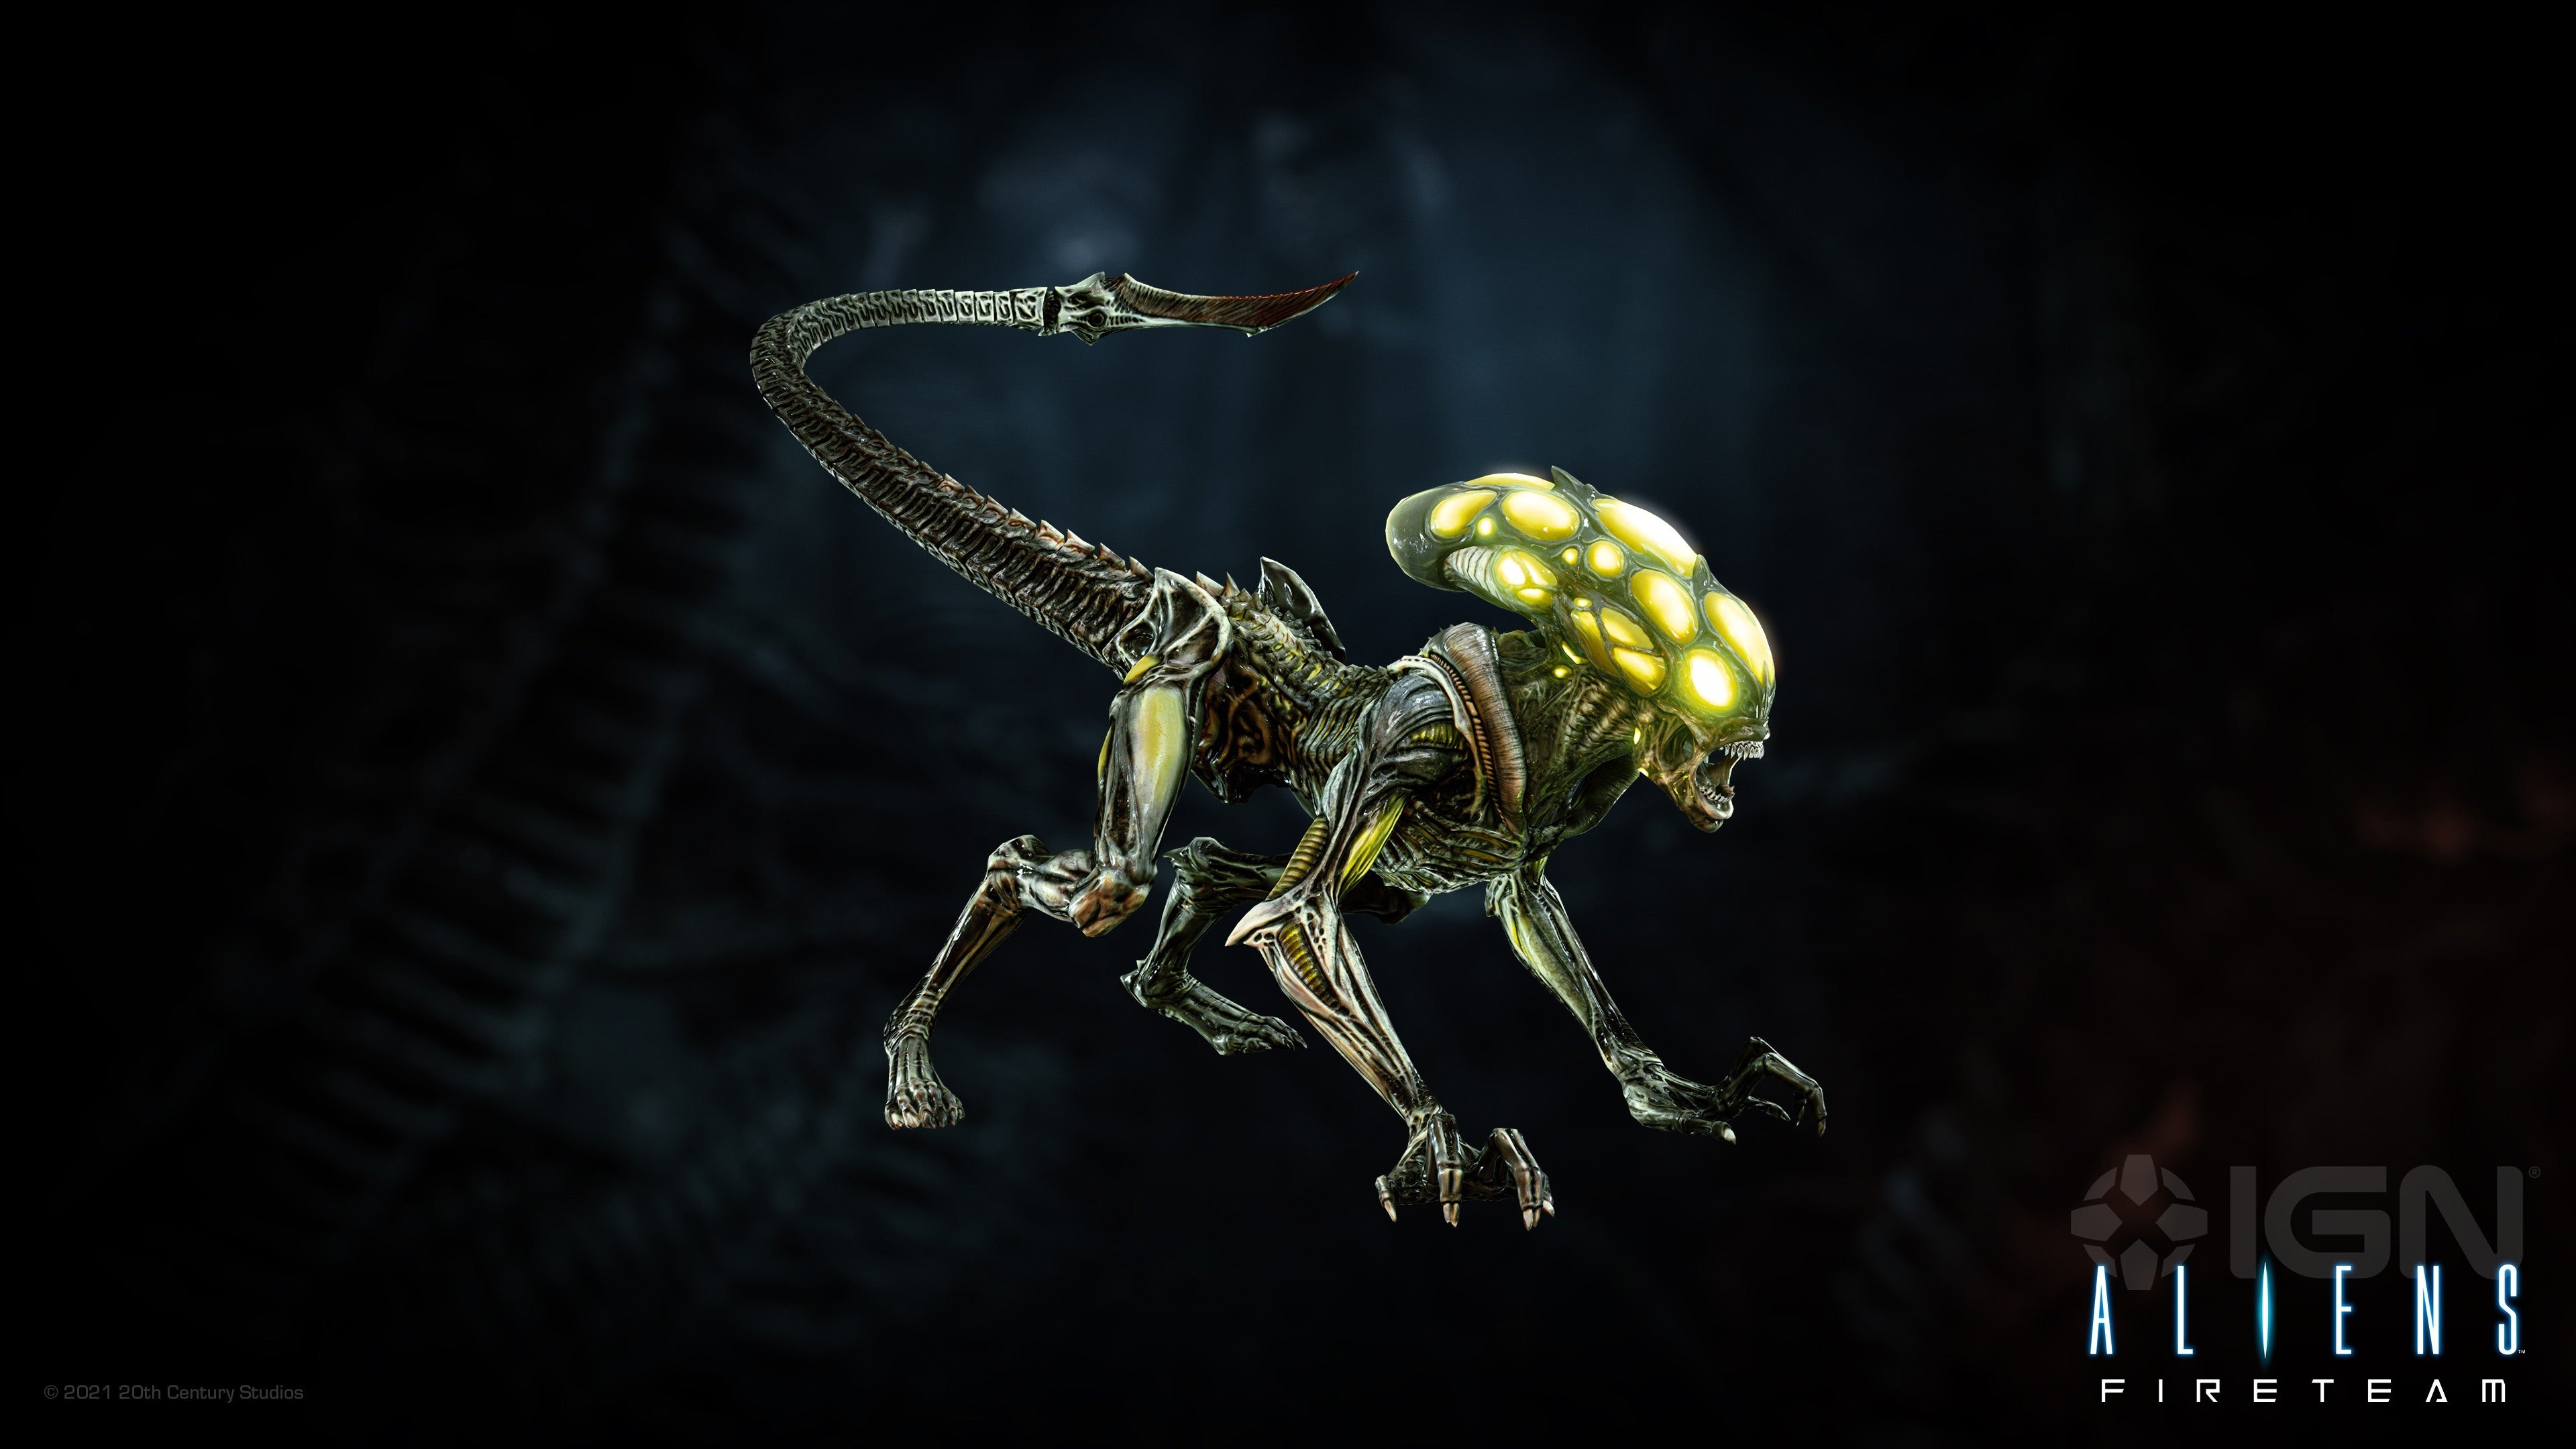 HD desktop wallpaper featuring an Alien creature from Aliens: Fireteam Elite game, set against a dark, atmospheric background.